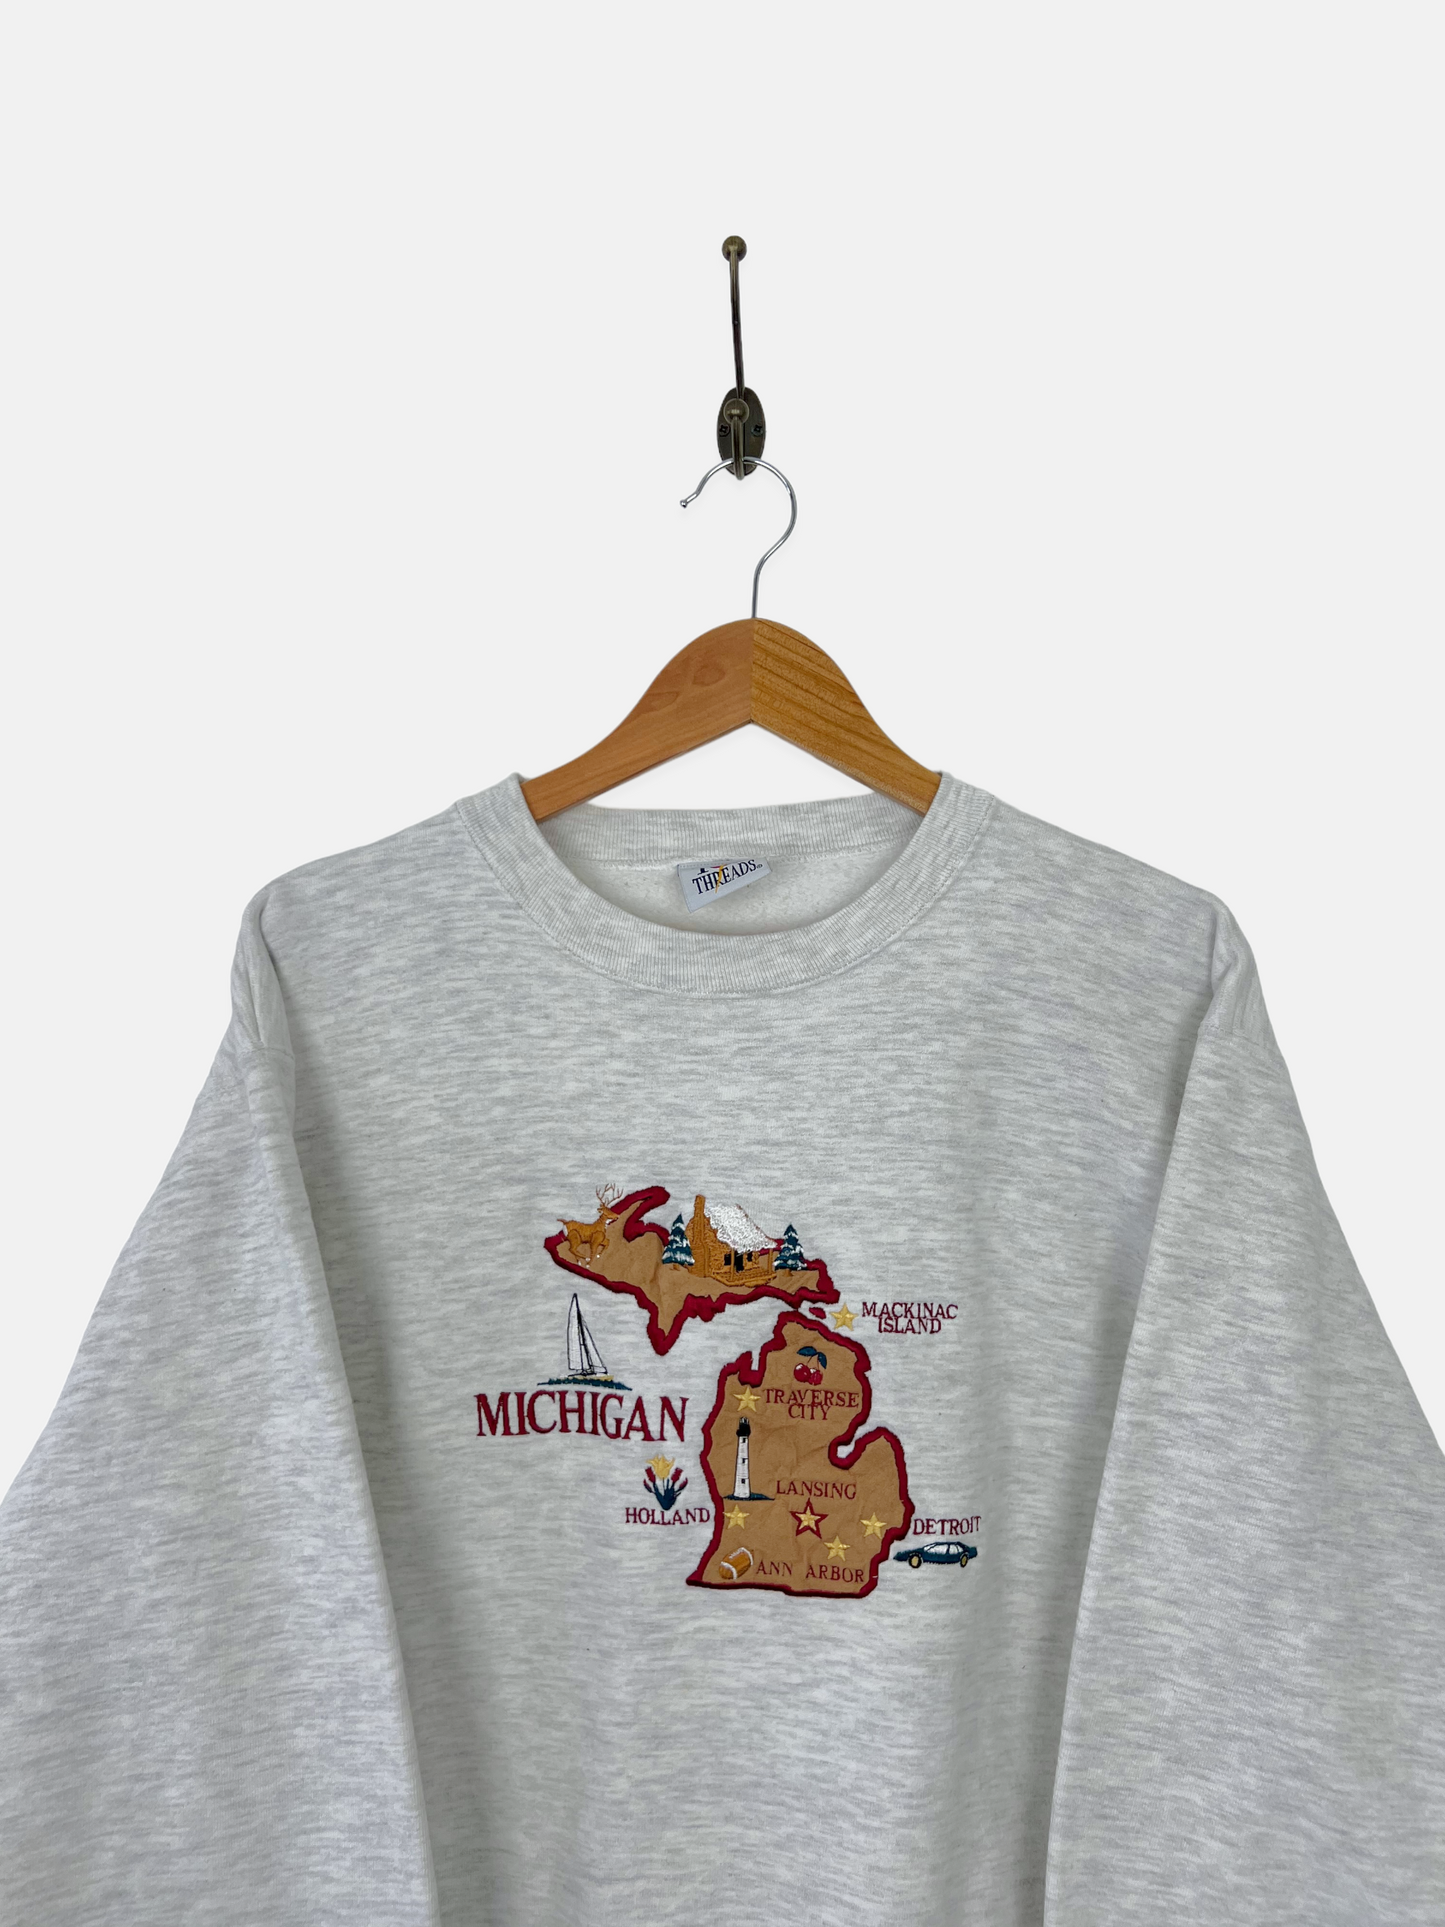 90's Michigan USA Made Embroidered Vintage Sweatshirt Size 10